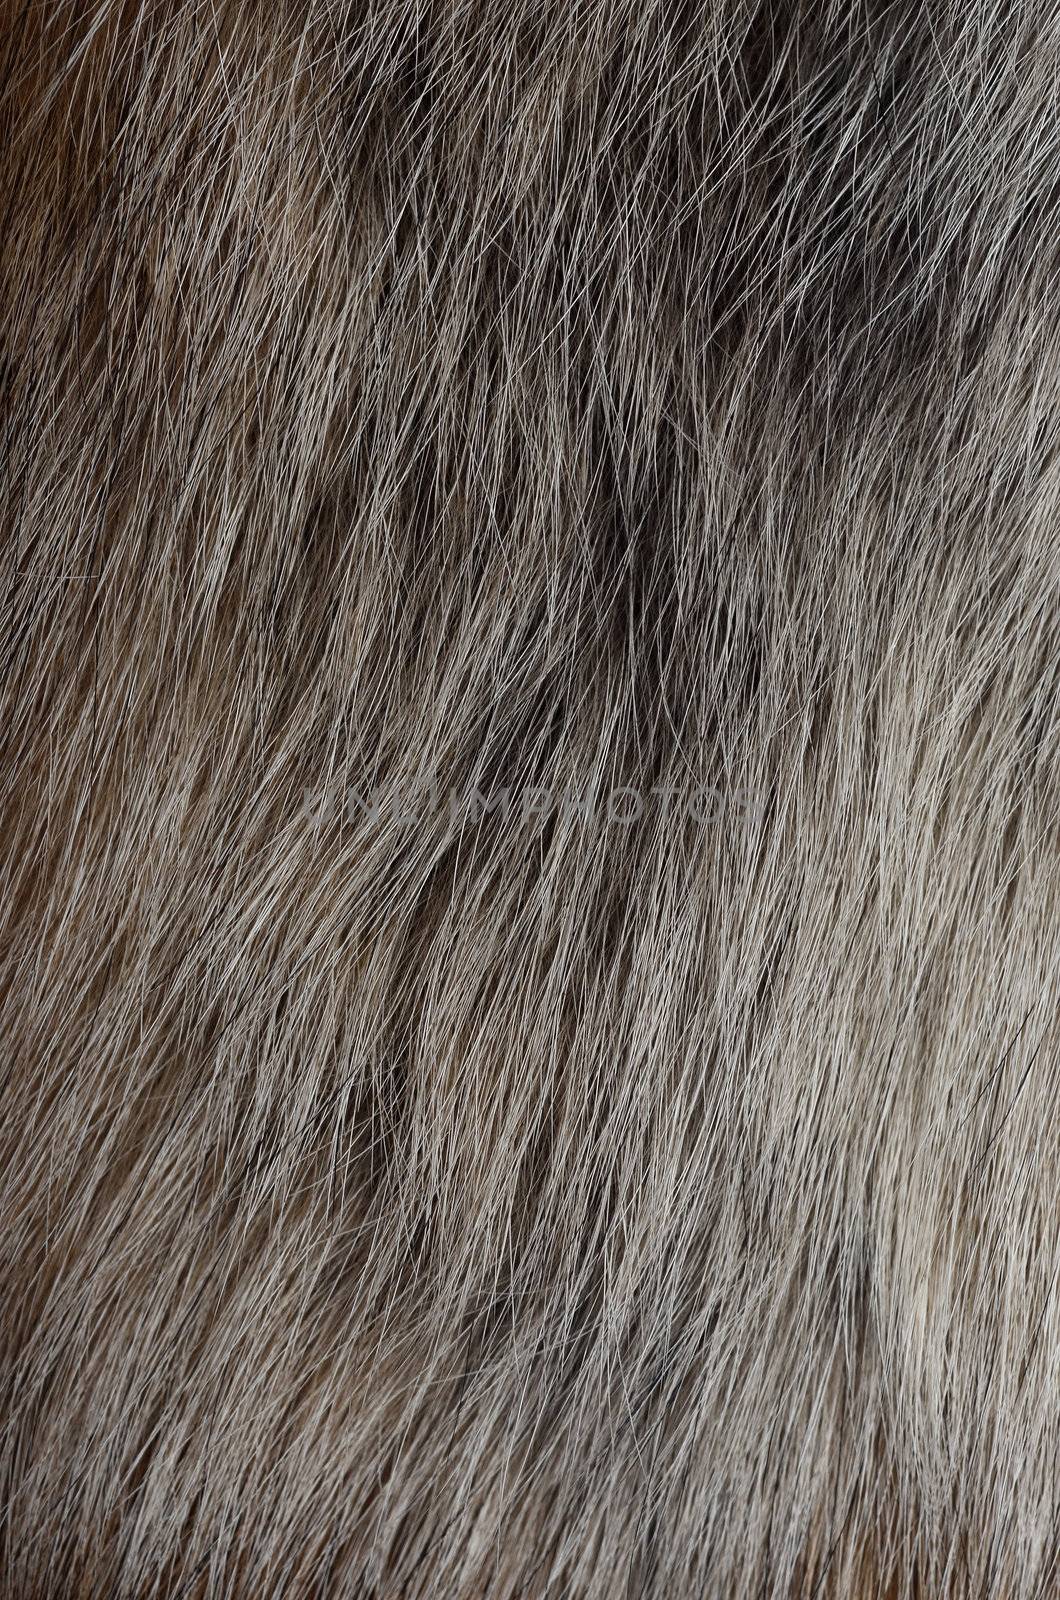 Polar fox fur texture by DNKSTUDIO